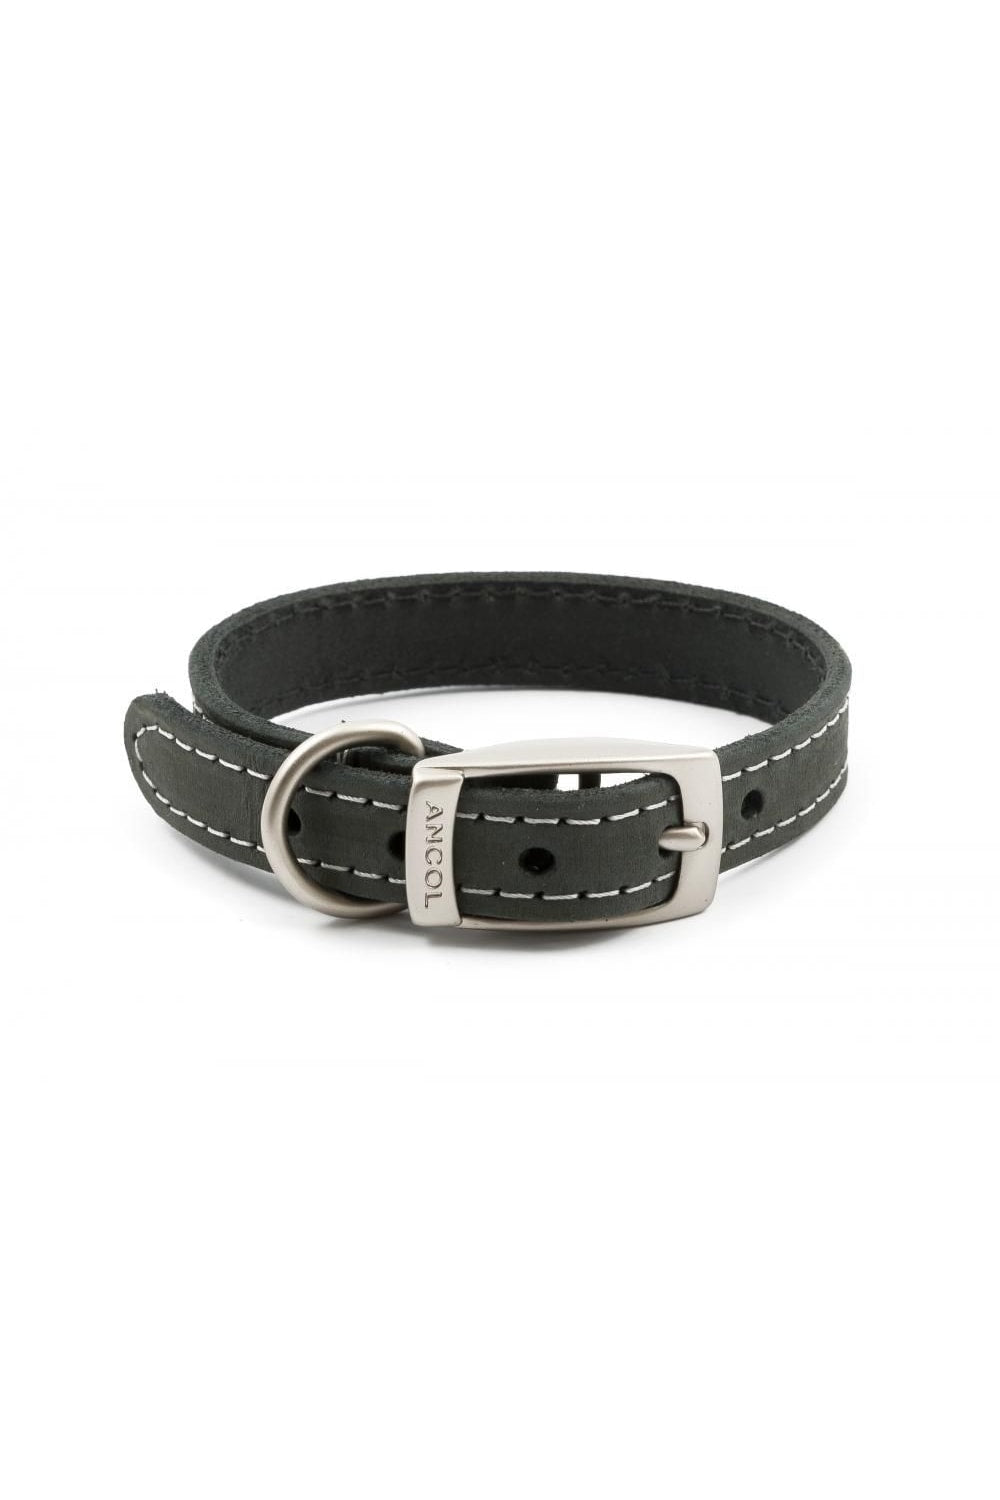 Ancol Timberwolf Leather Dog Collar (Gray) (7.8-10.2in)